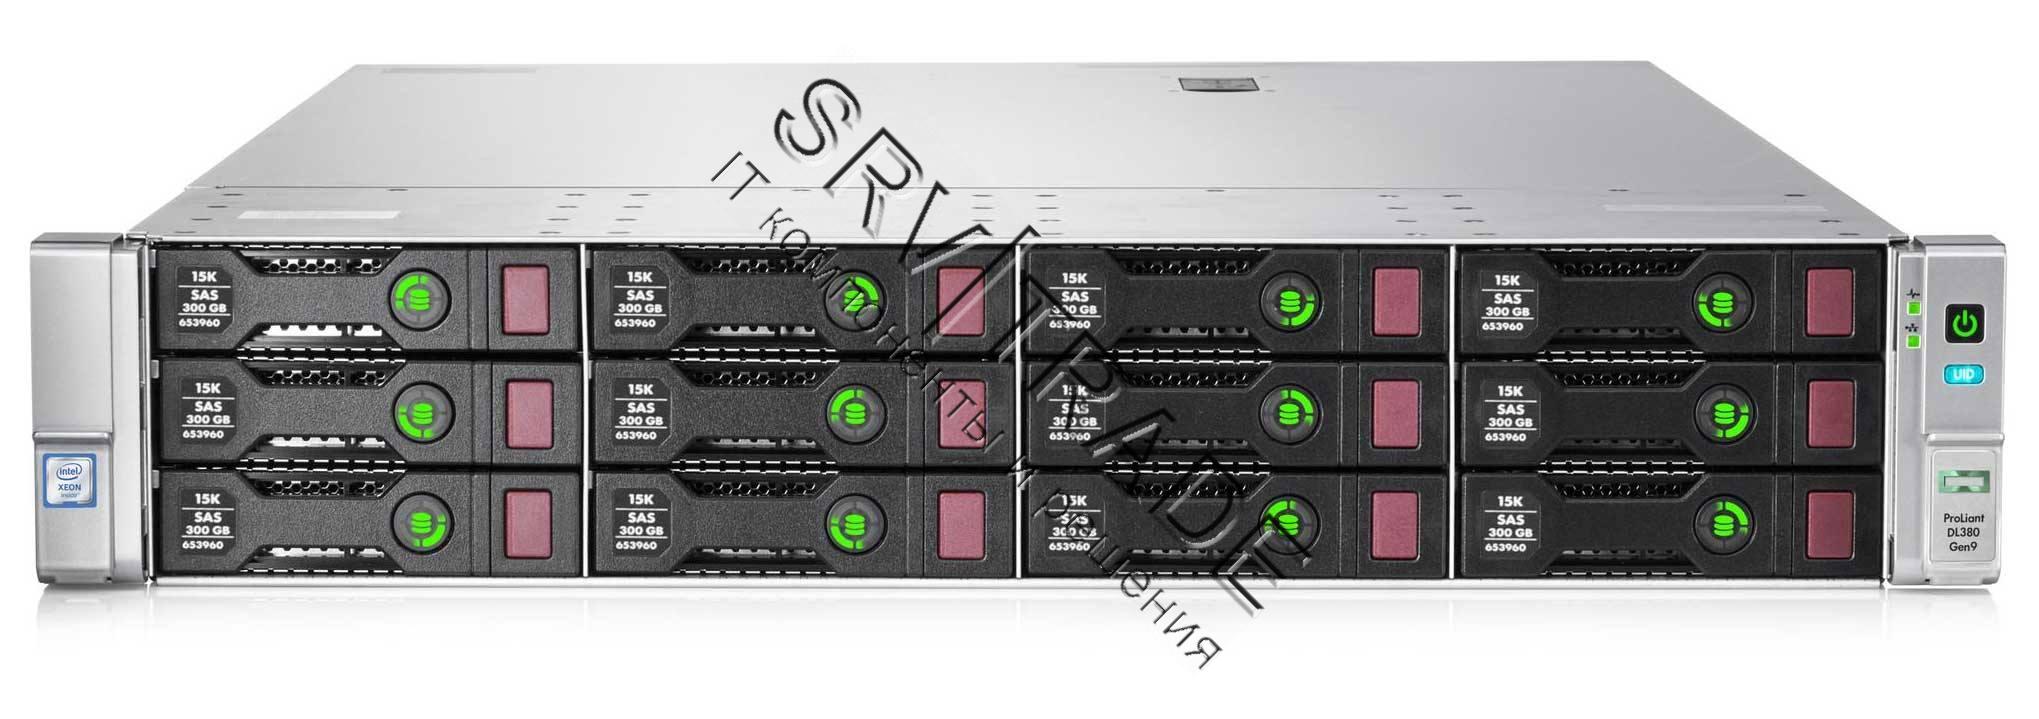 Сервер Proliant DL380 HPM Gen9 E5-2690v3 Rack(2U)/803860-B21